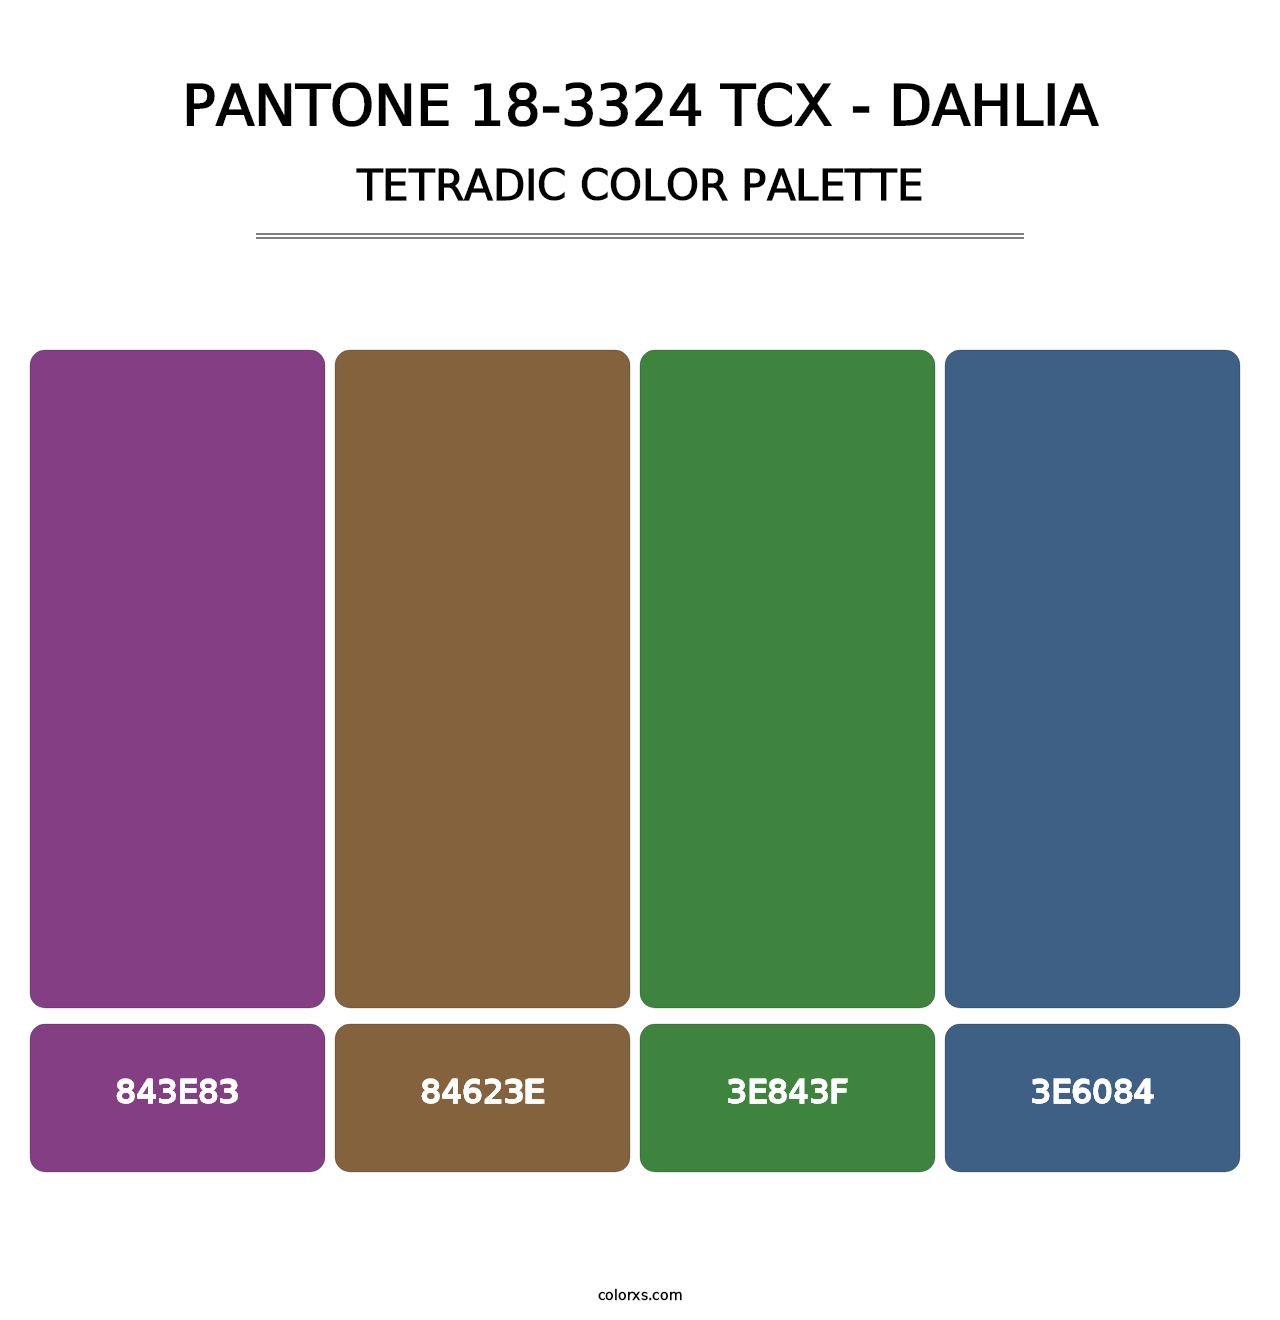 PANTONE 18-3324 TCX - Dahlia - Tetradic Color Palette